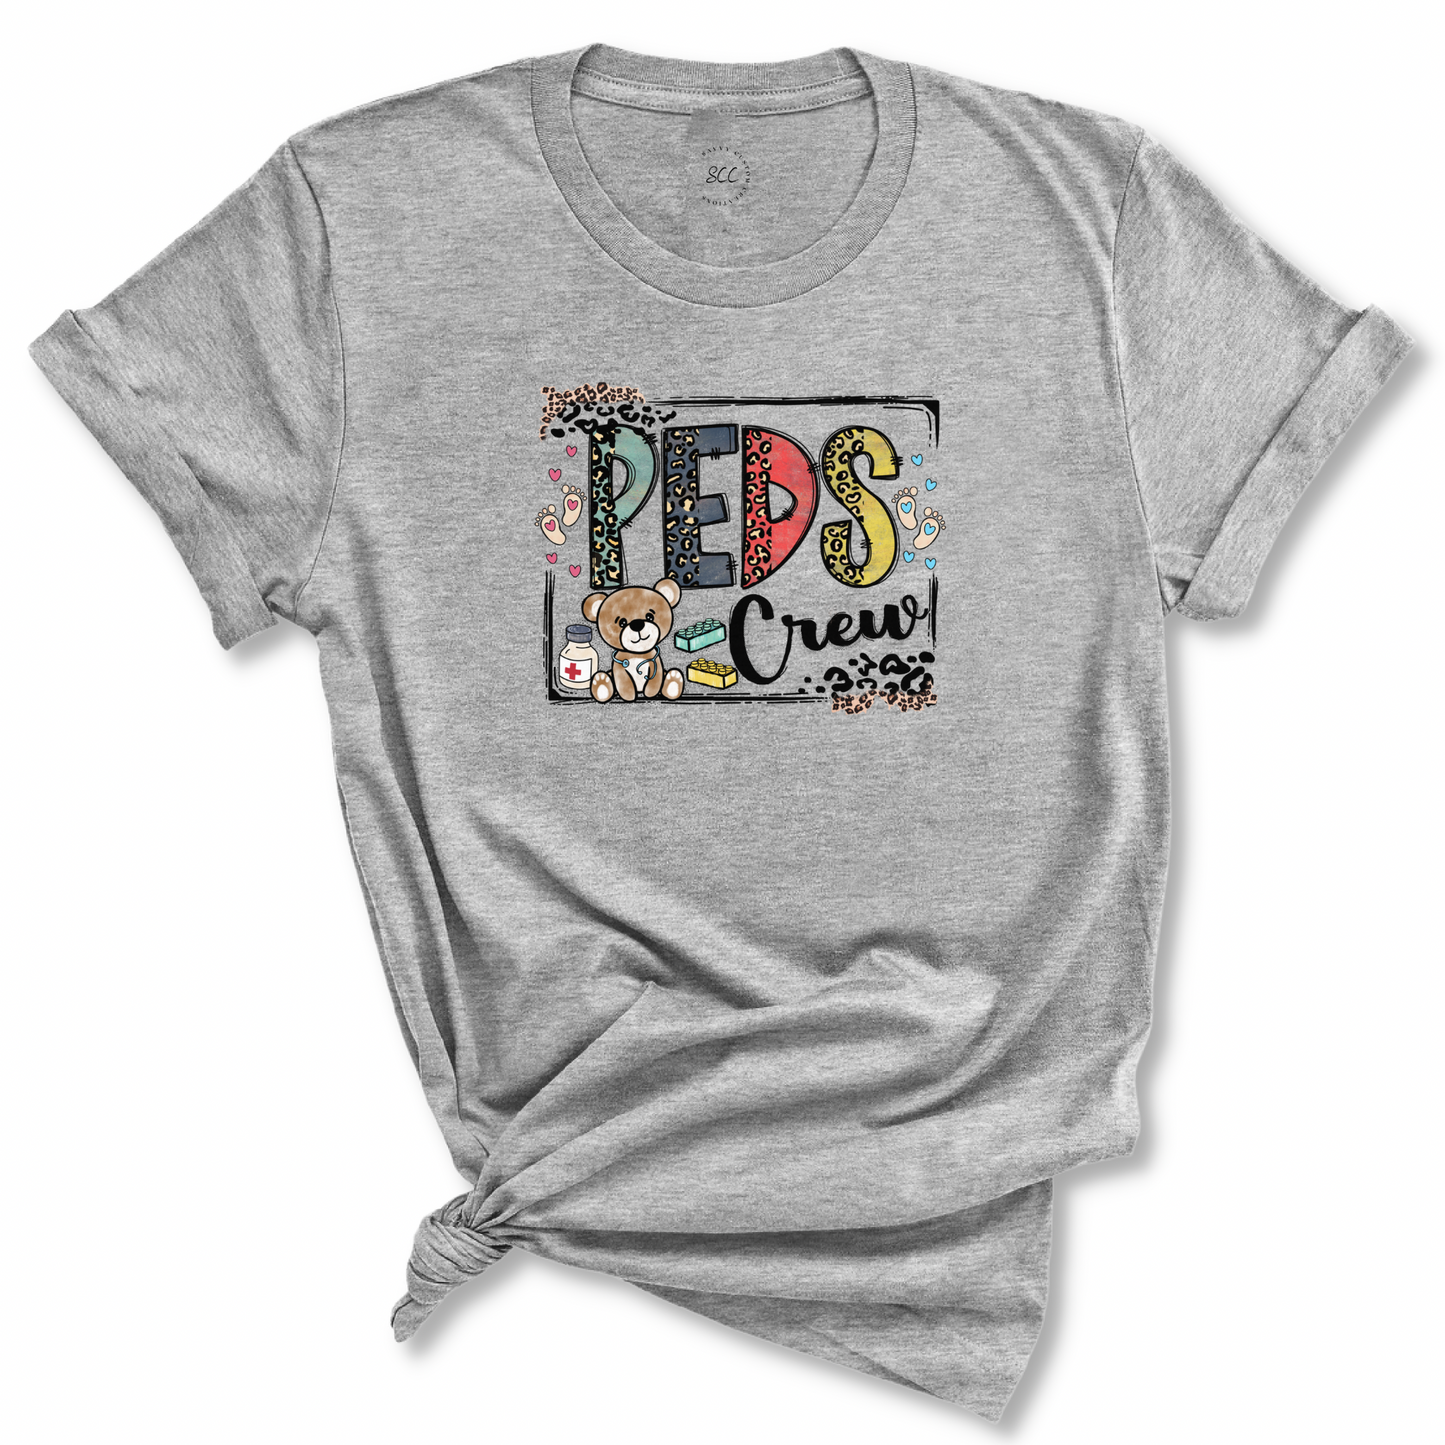 PEDS CREW - Unisex T-Shirt